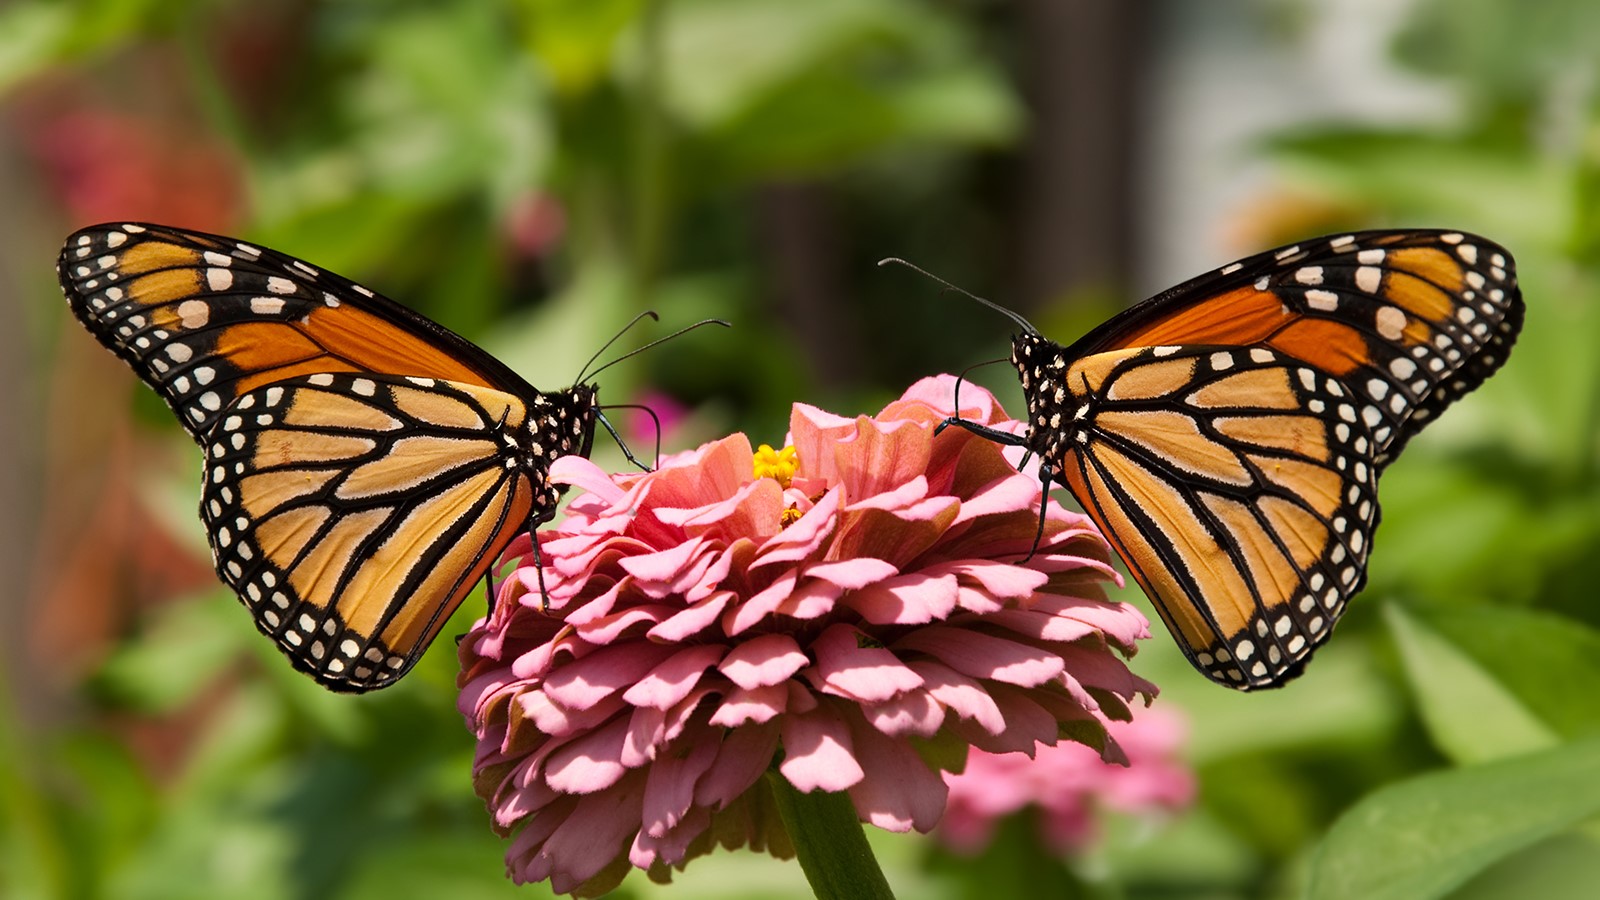 Two Monarch butterflies on a pink flower